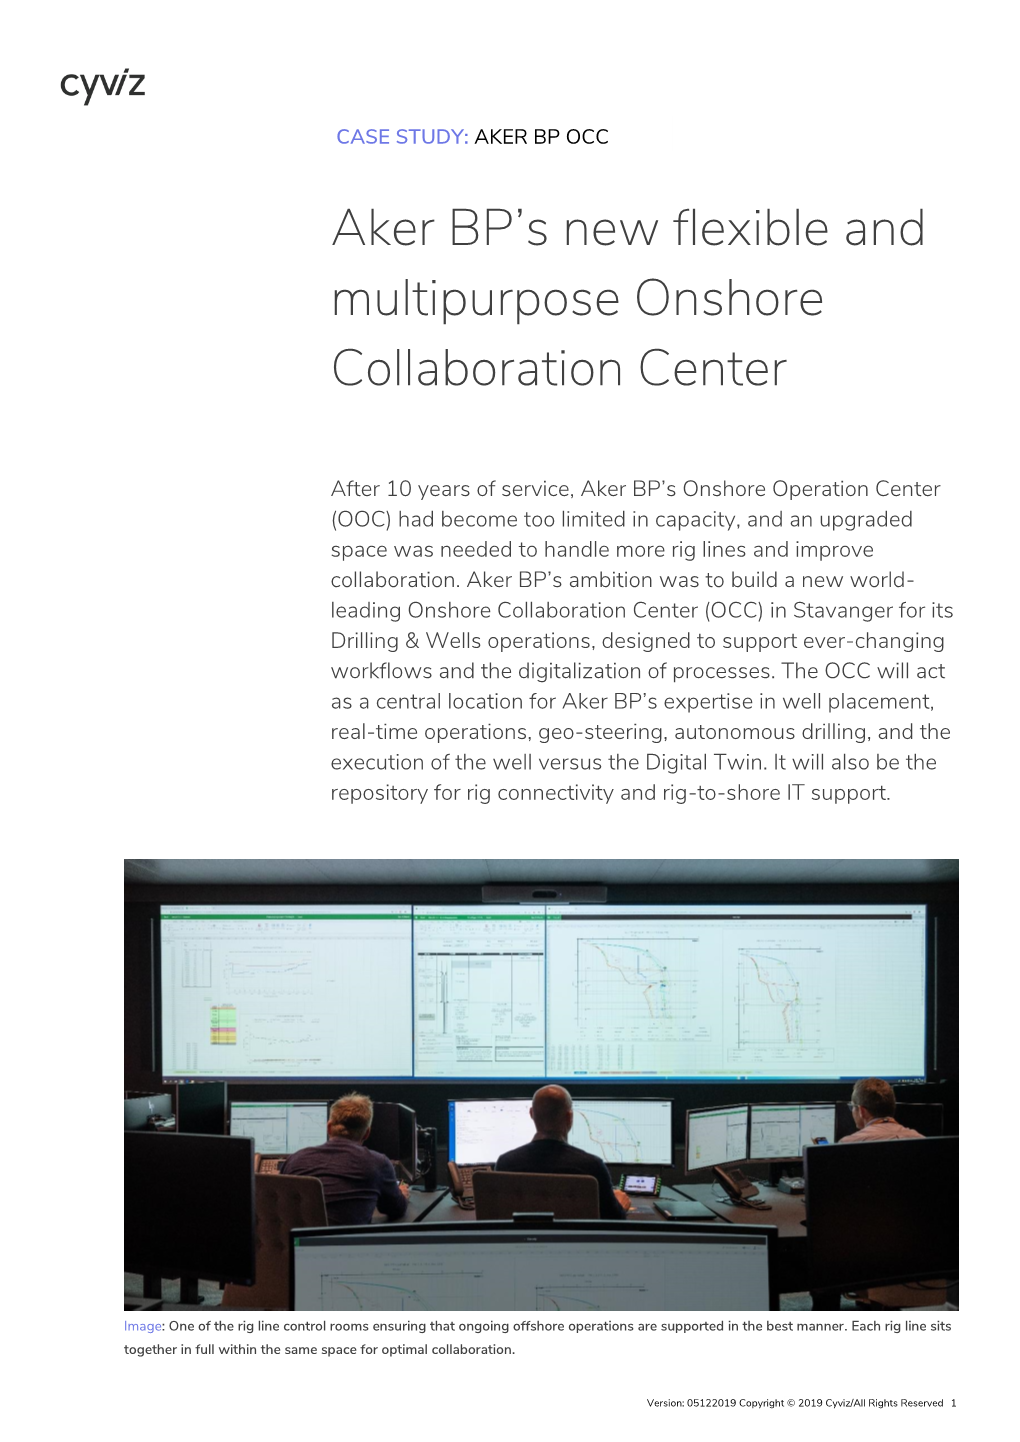 Aker BP's New Flexible and Multipurpose Onshore